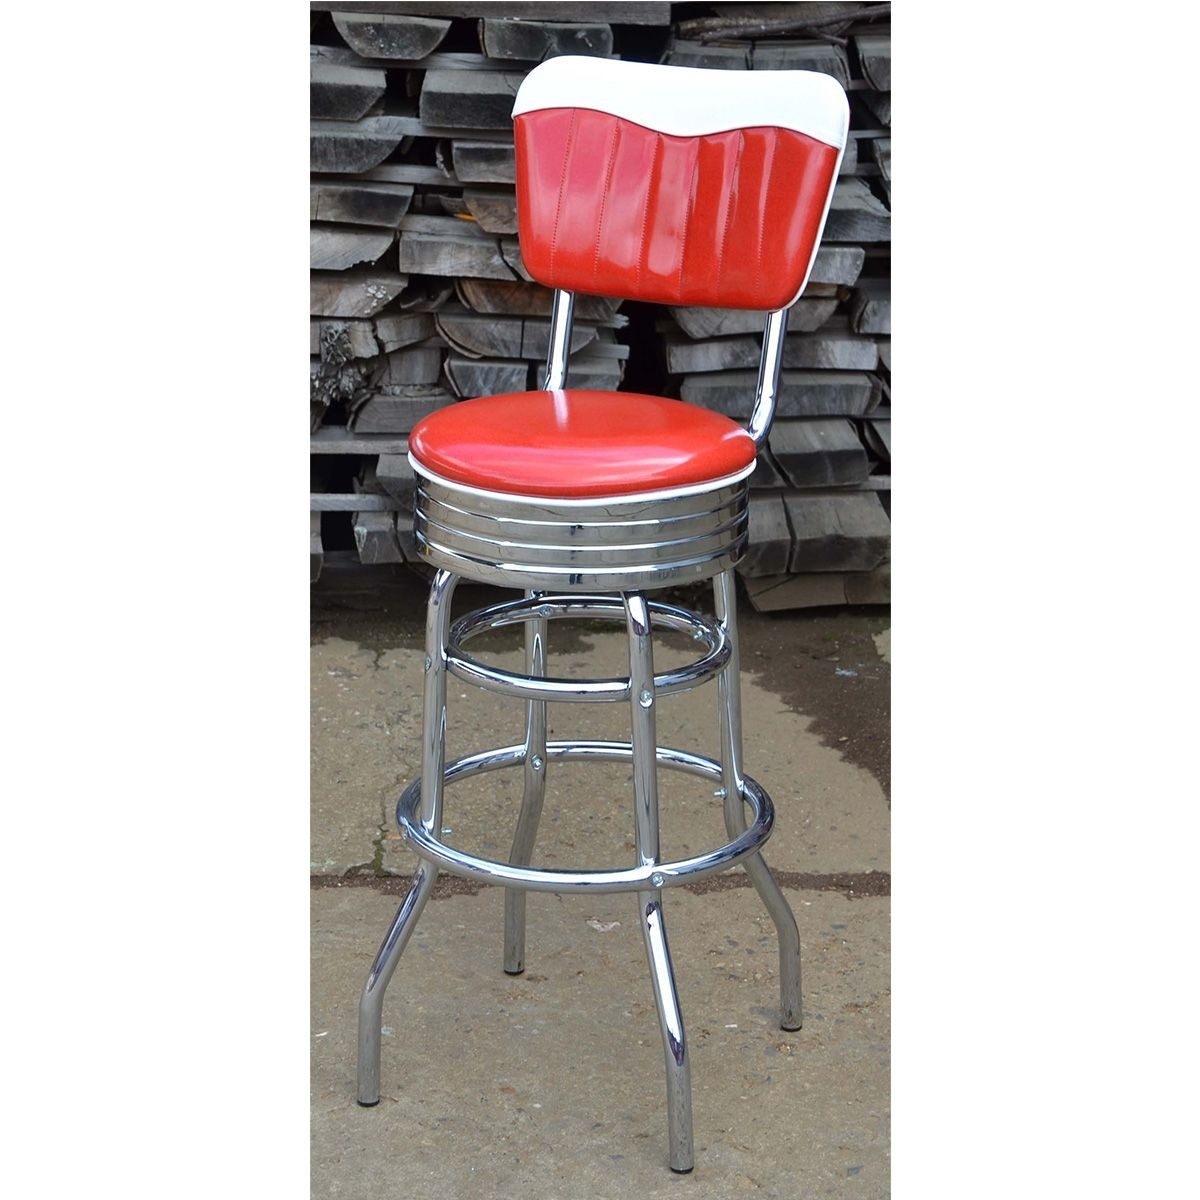 American retro bar stool with backrest diner restaurants